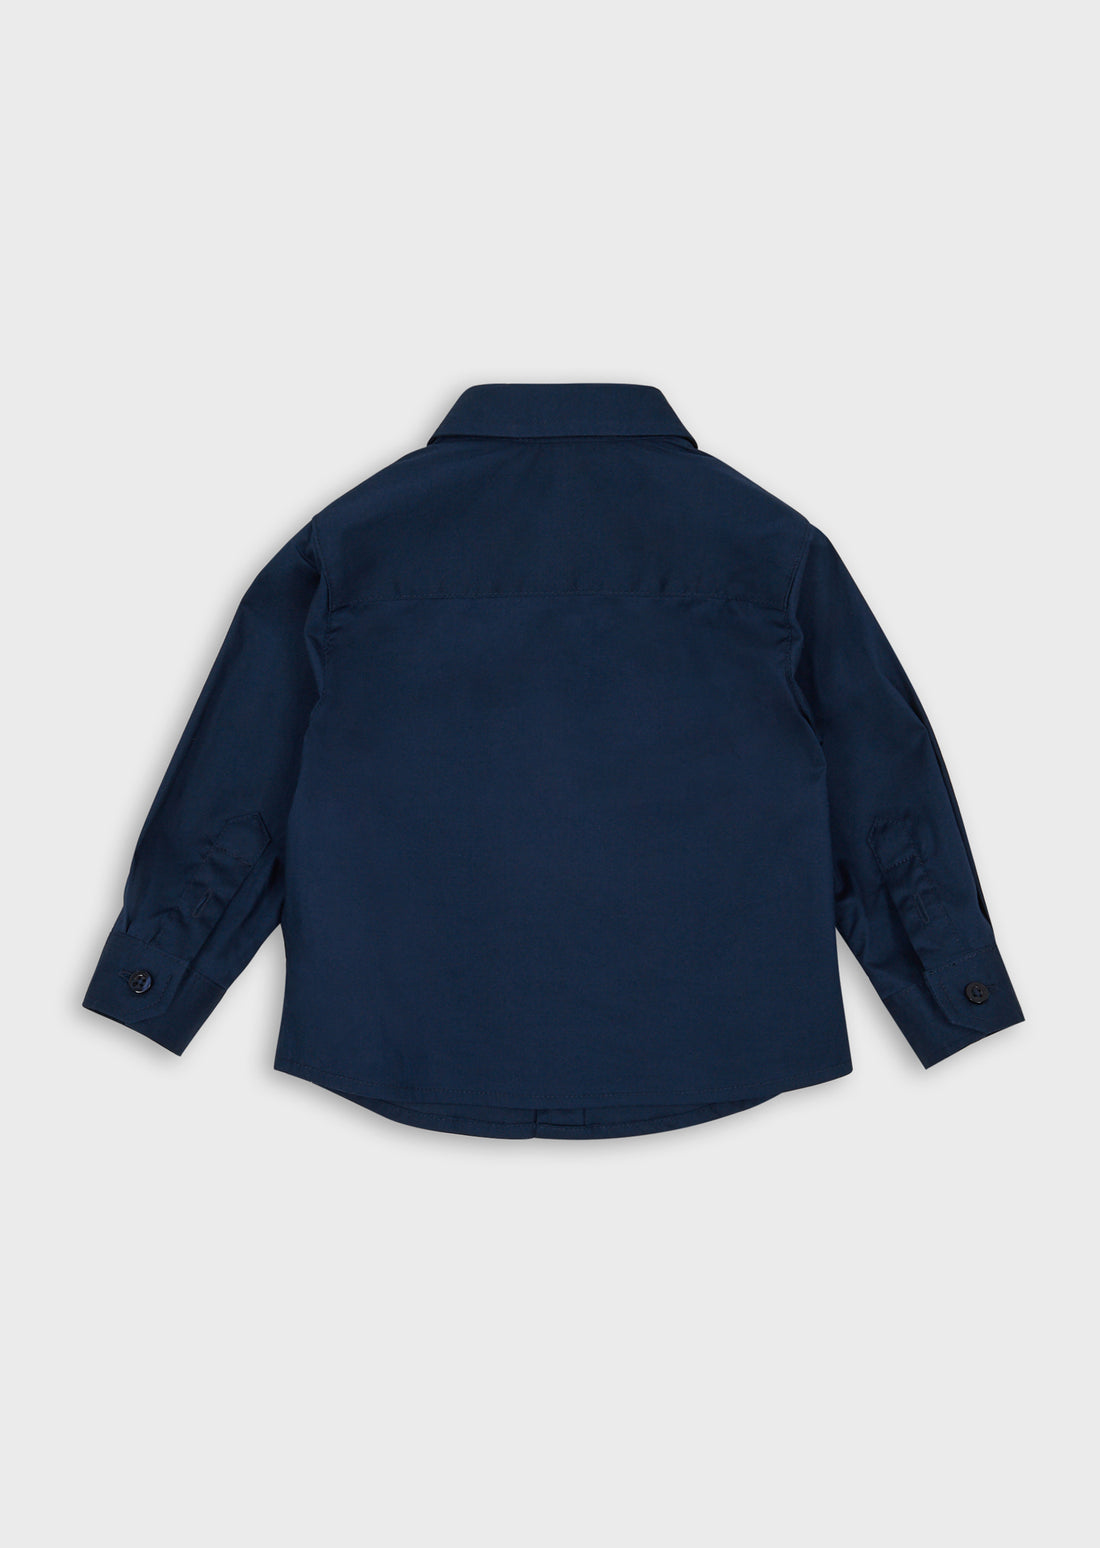 Emporio Armani Shirt Style:8Nhc01